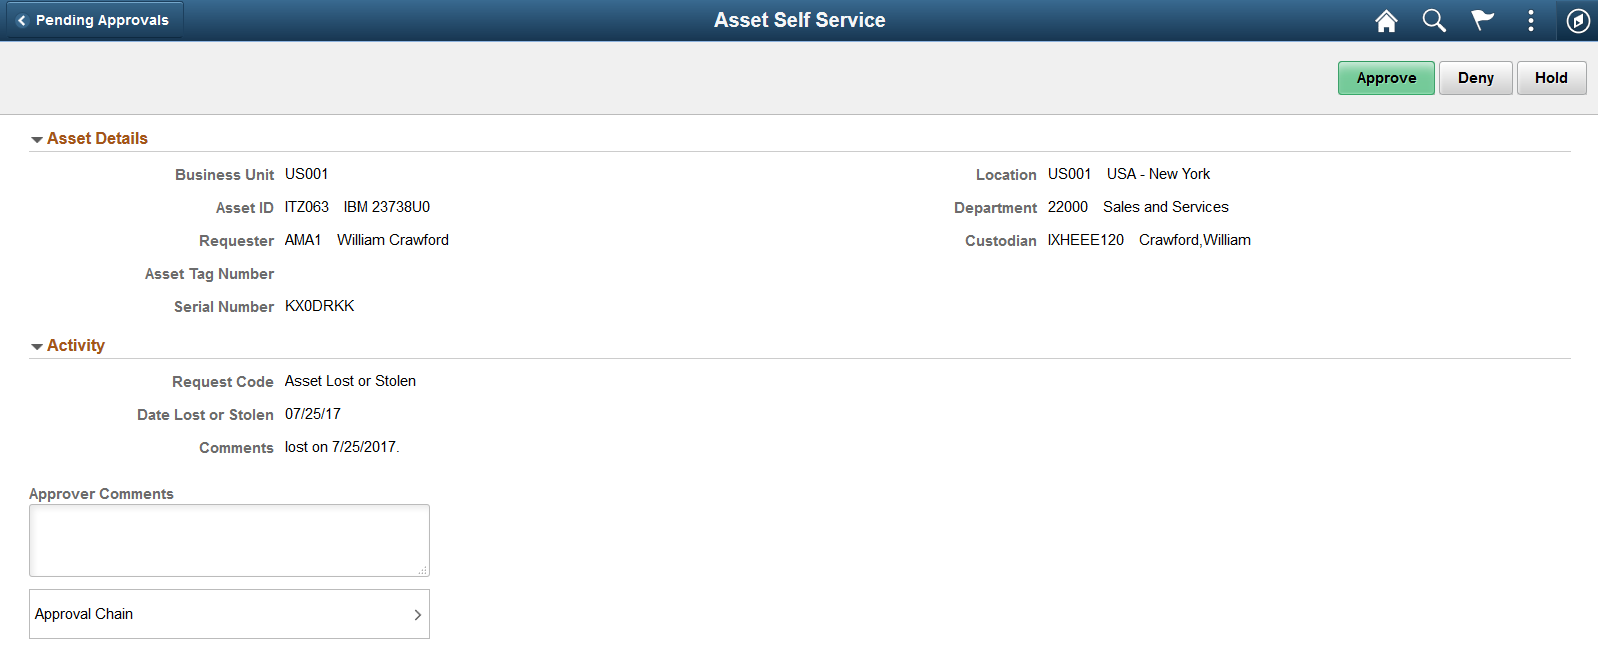 Asset Self Service Approval Header Details Page